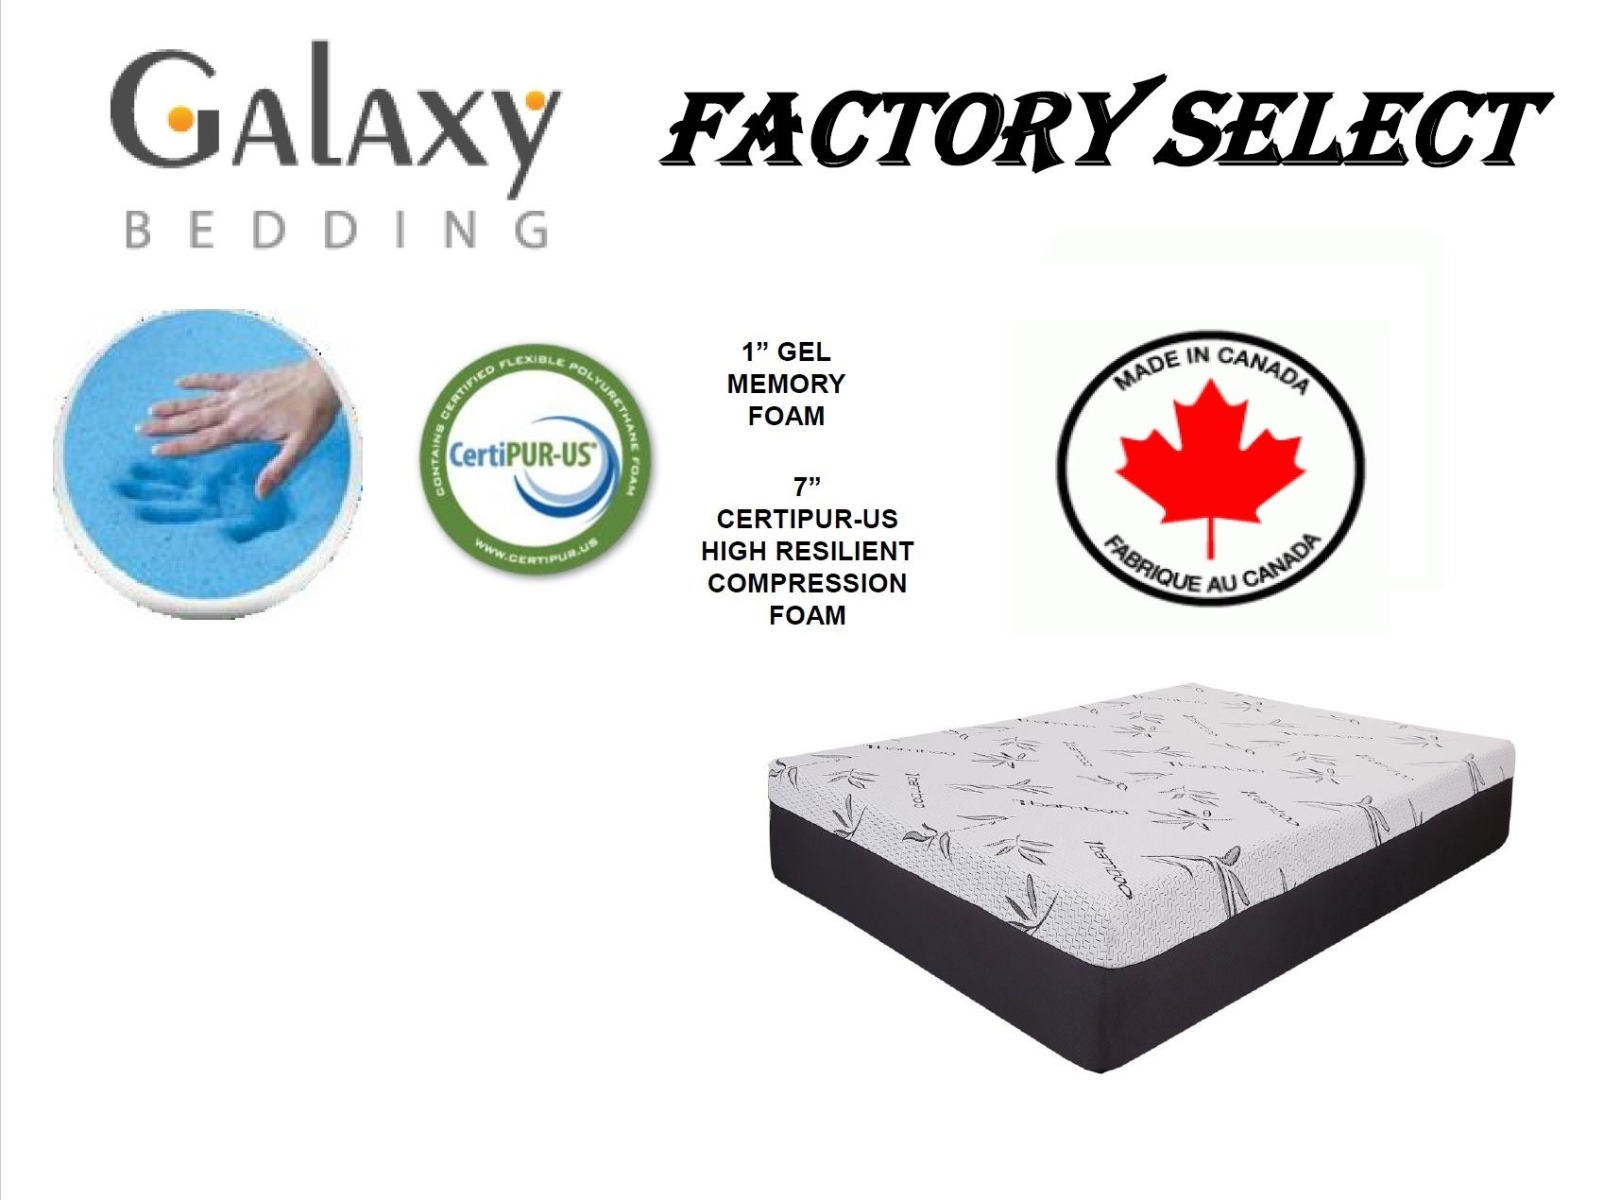 Galaxy 8 inch gel memory foam mattress factory select special specs